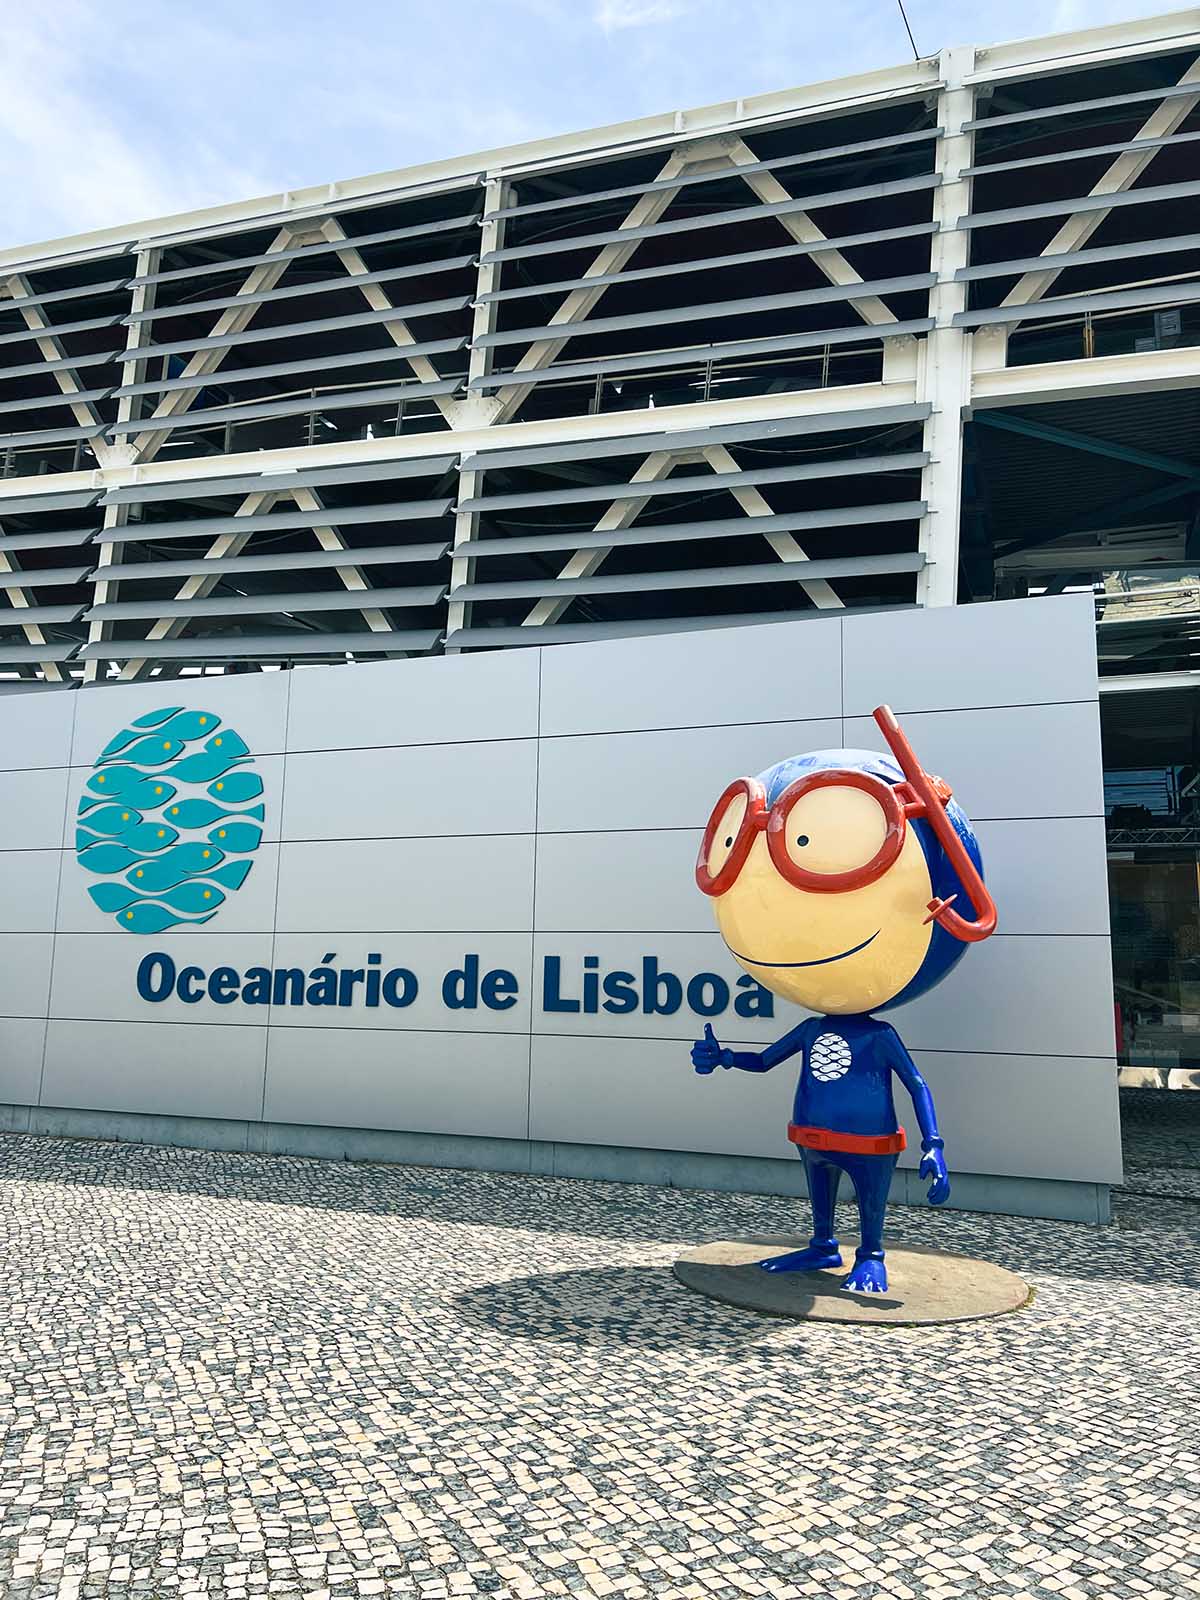 Lisbon Oceanarium sign